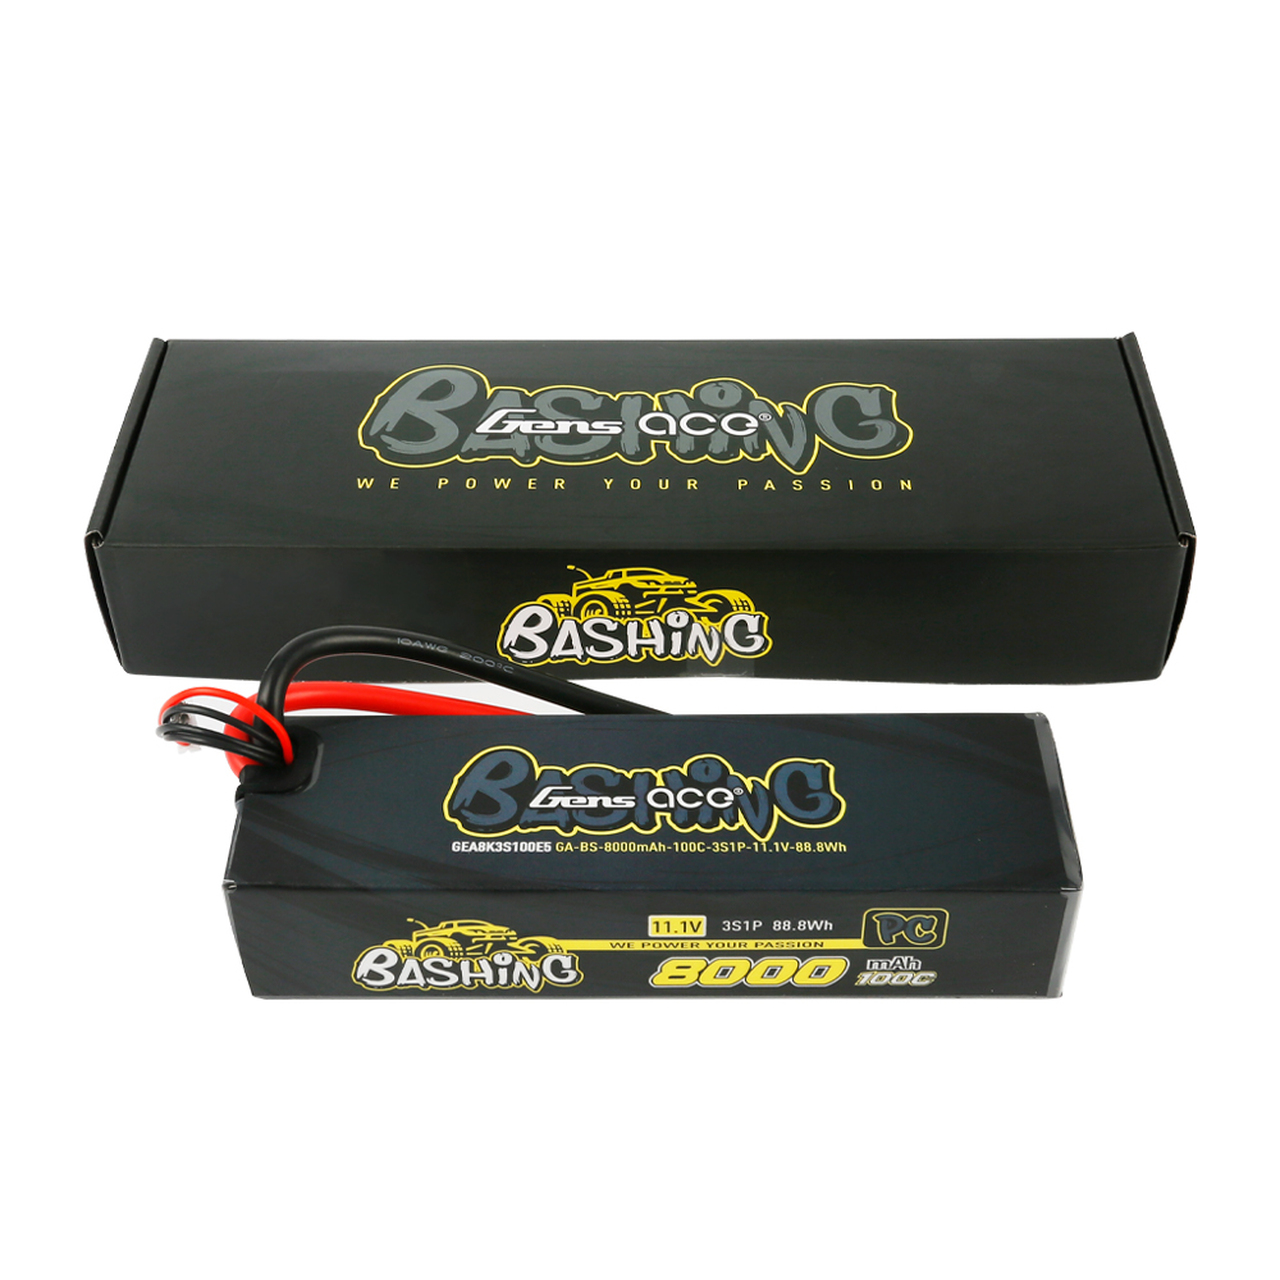 Gens ace Bashing Pro 11.1V 100C 3S 8000mah Lipo Battery Pack with EC5 Plug for Arrma